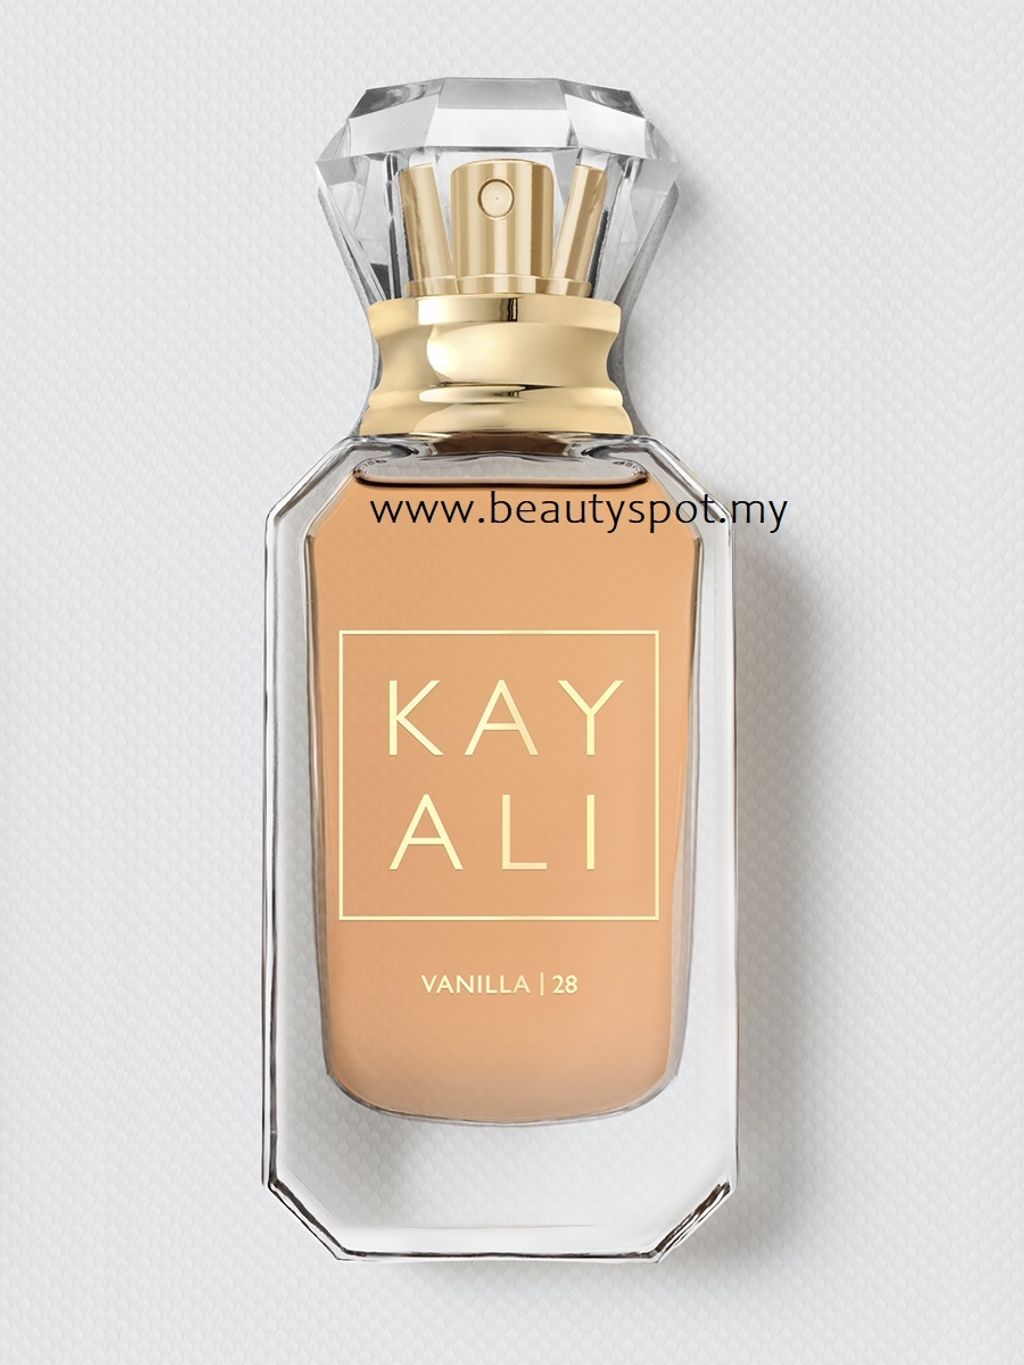 Kayali Utopia Vanilla Coco 21, Beauty & Personal Care, Fragrance &  Deodorants on Carousell